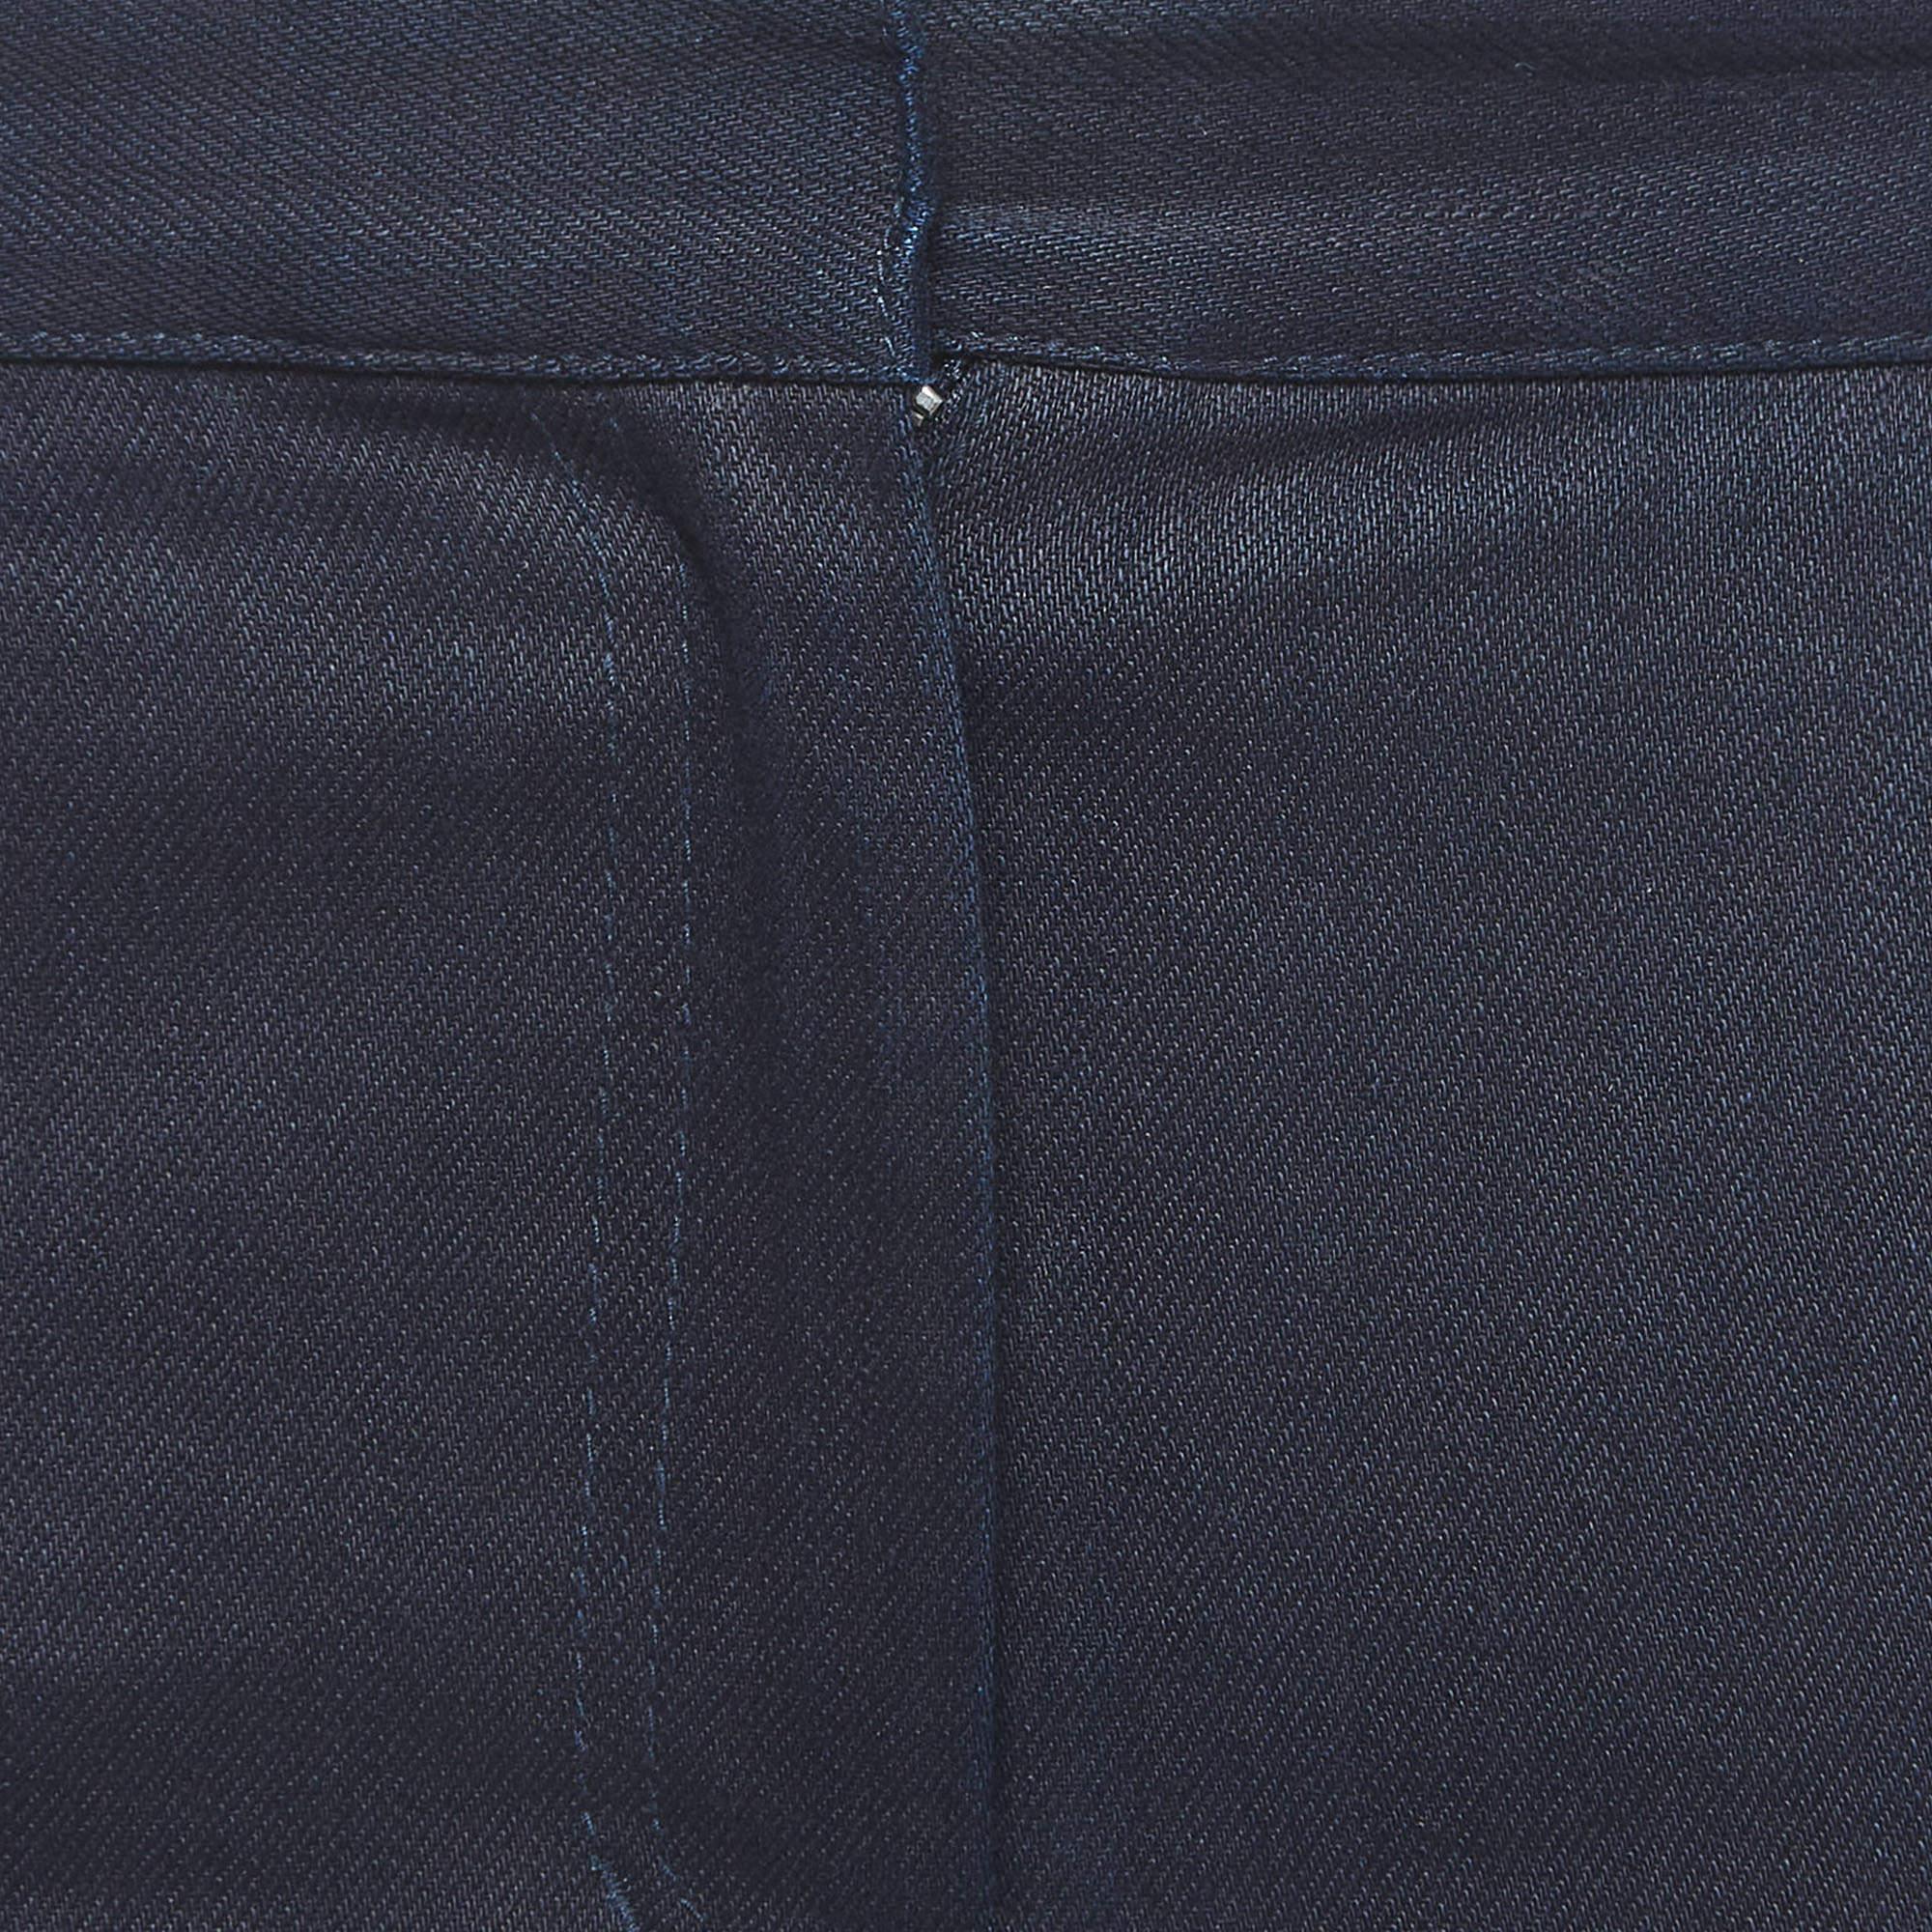 Celine Navy Blue Denim Straight Leg Jeans M Waist 30'' In Good Condition For Sale In Dubai, Al Qouz 2